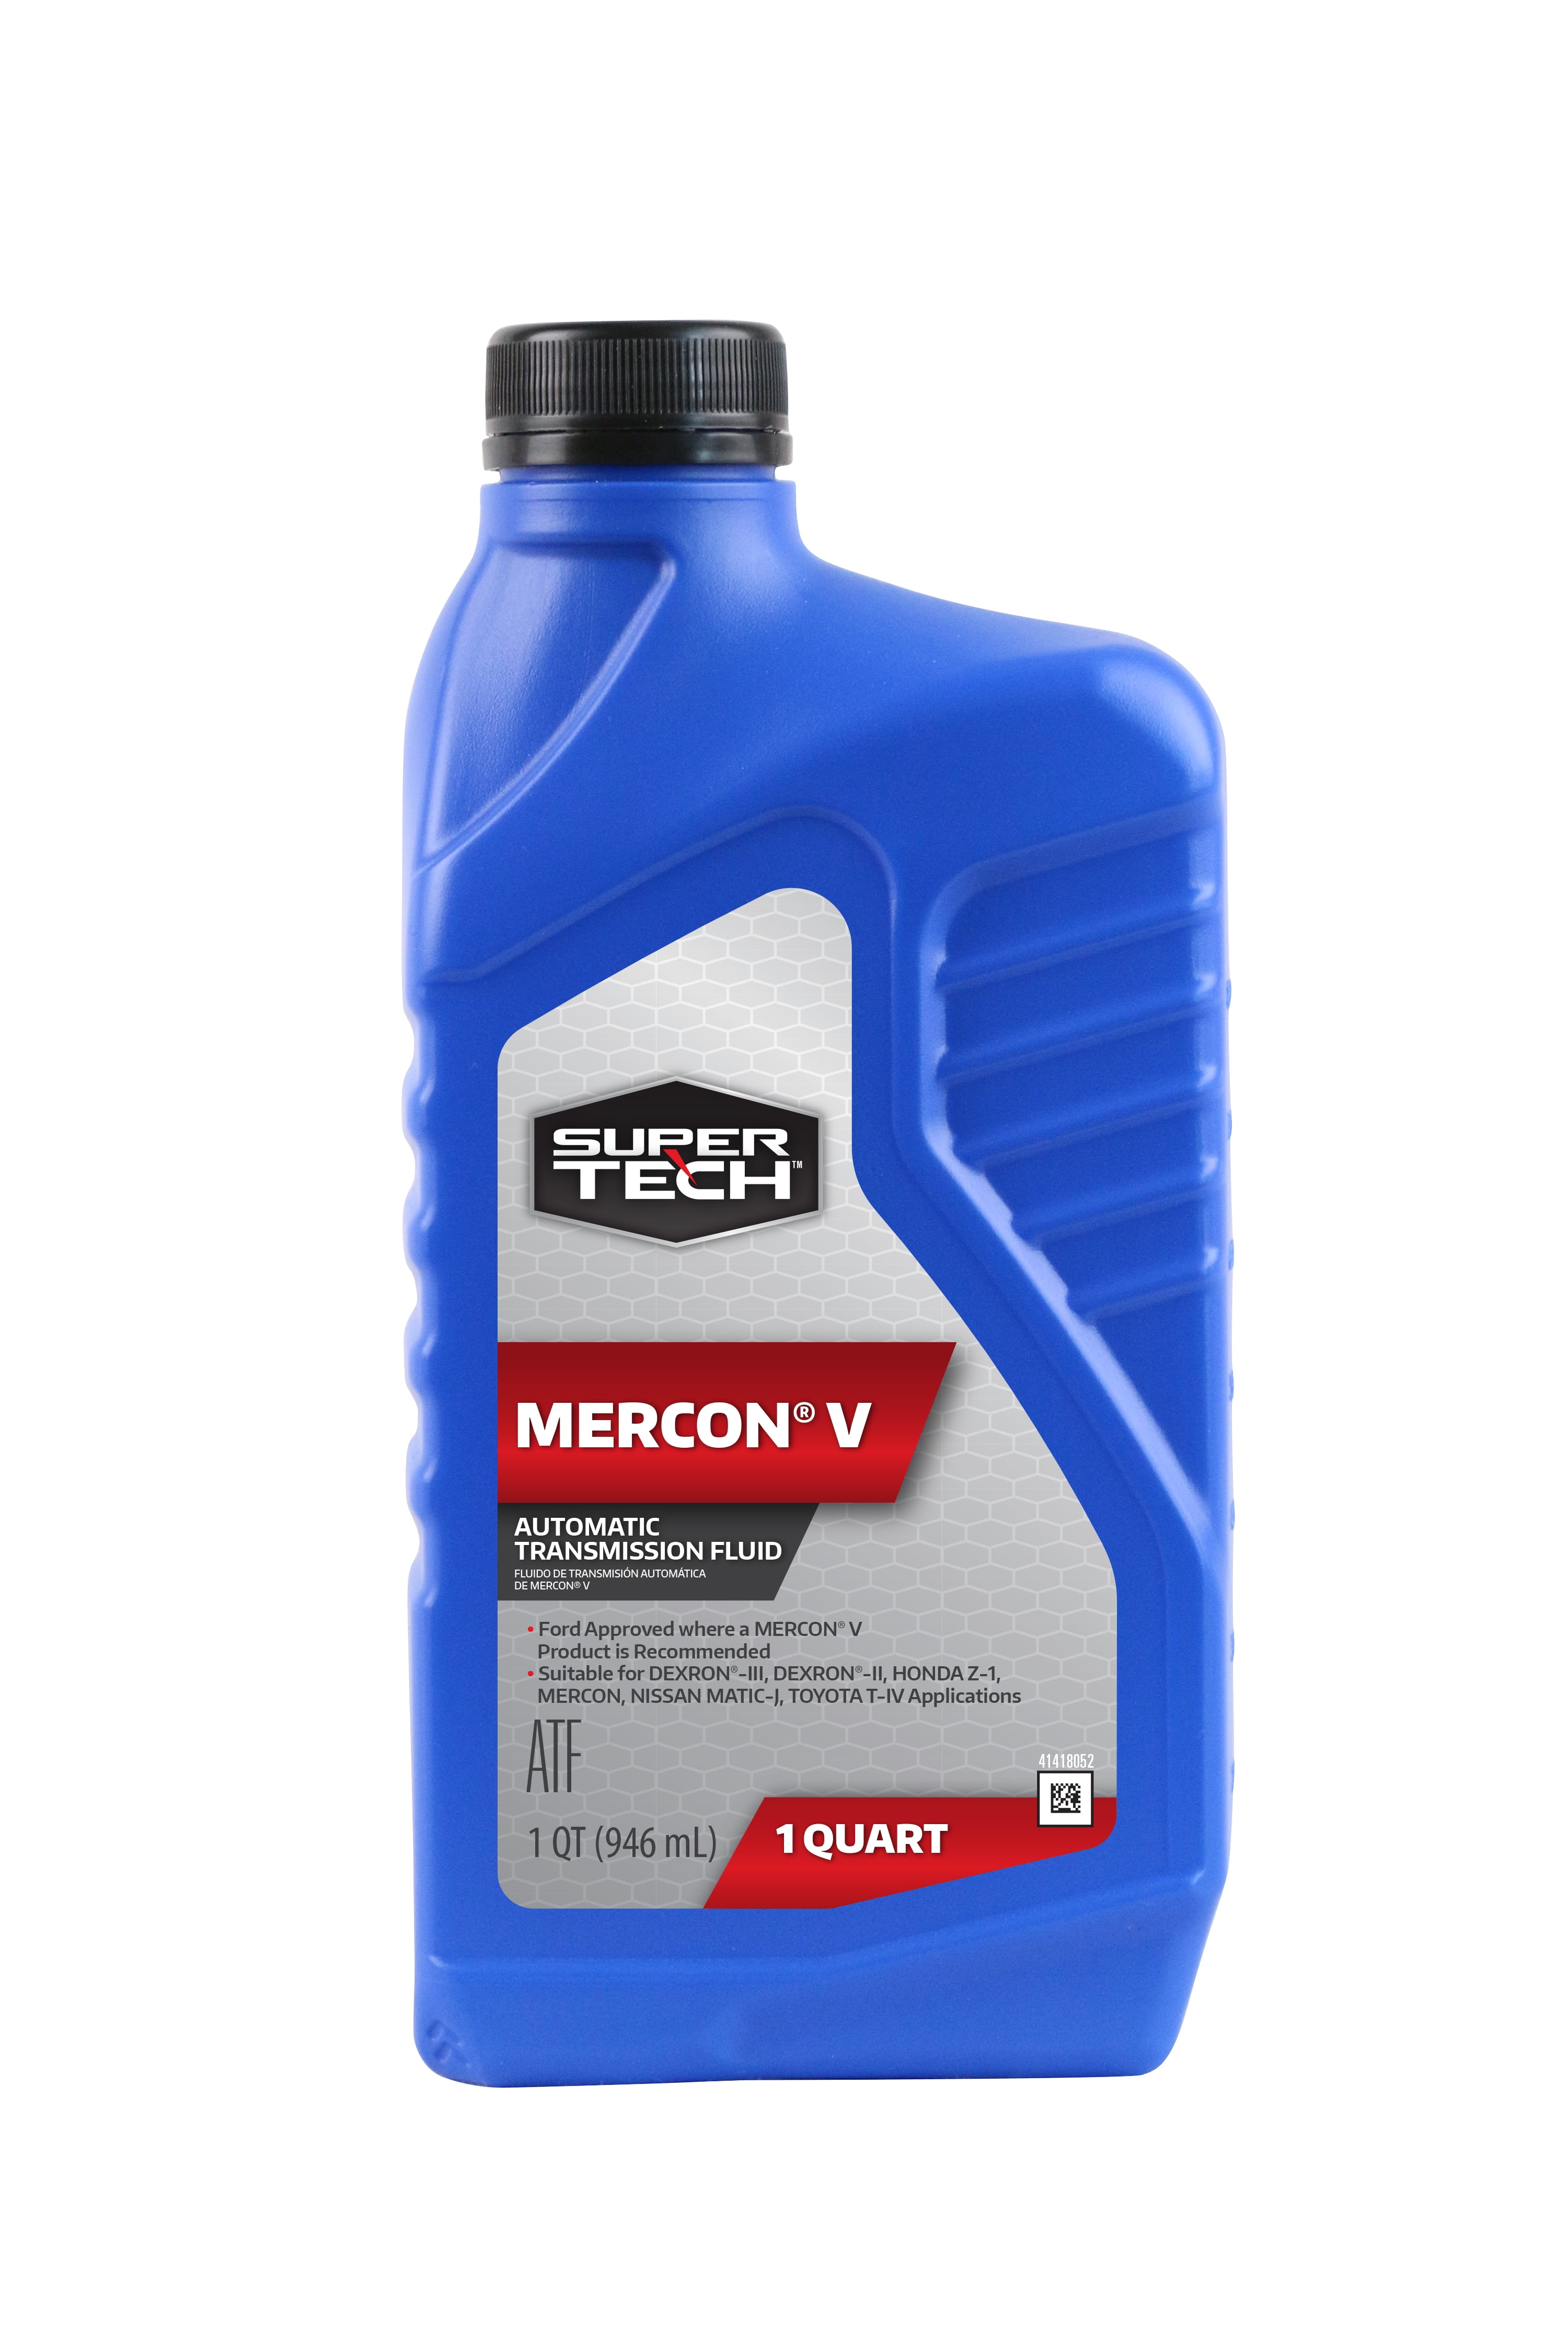 Super Tech Mercon V Automatic Transmission Fluid - 1 qt